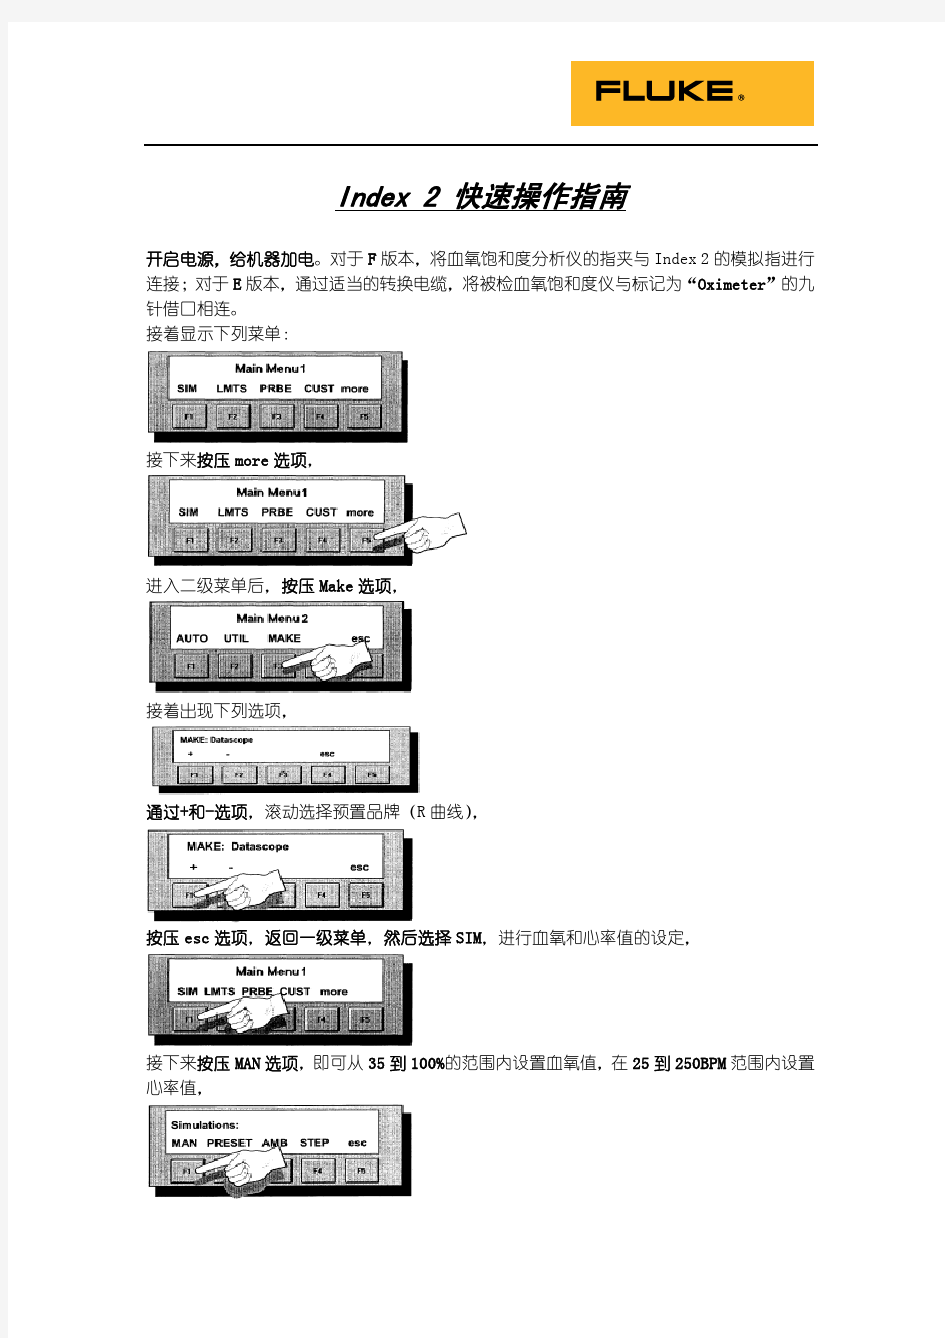 FLUKE index 2 FE 脉冲血氧模拟器 快速使用手册 中文 2012